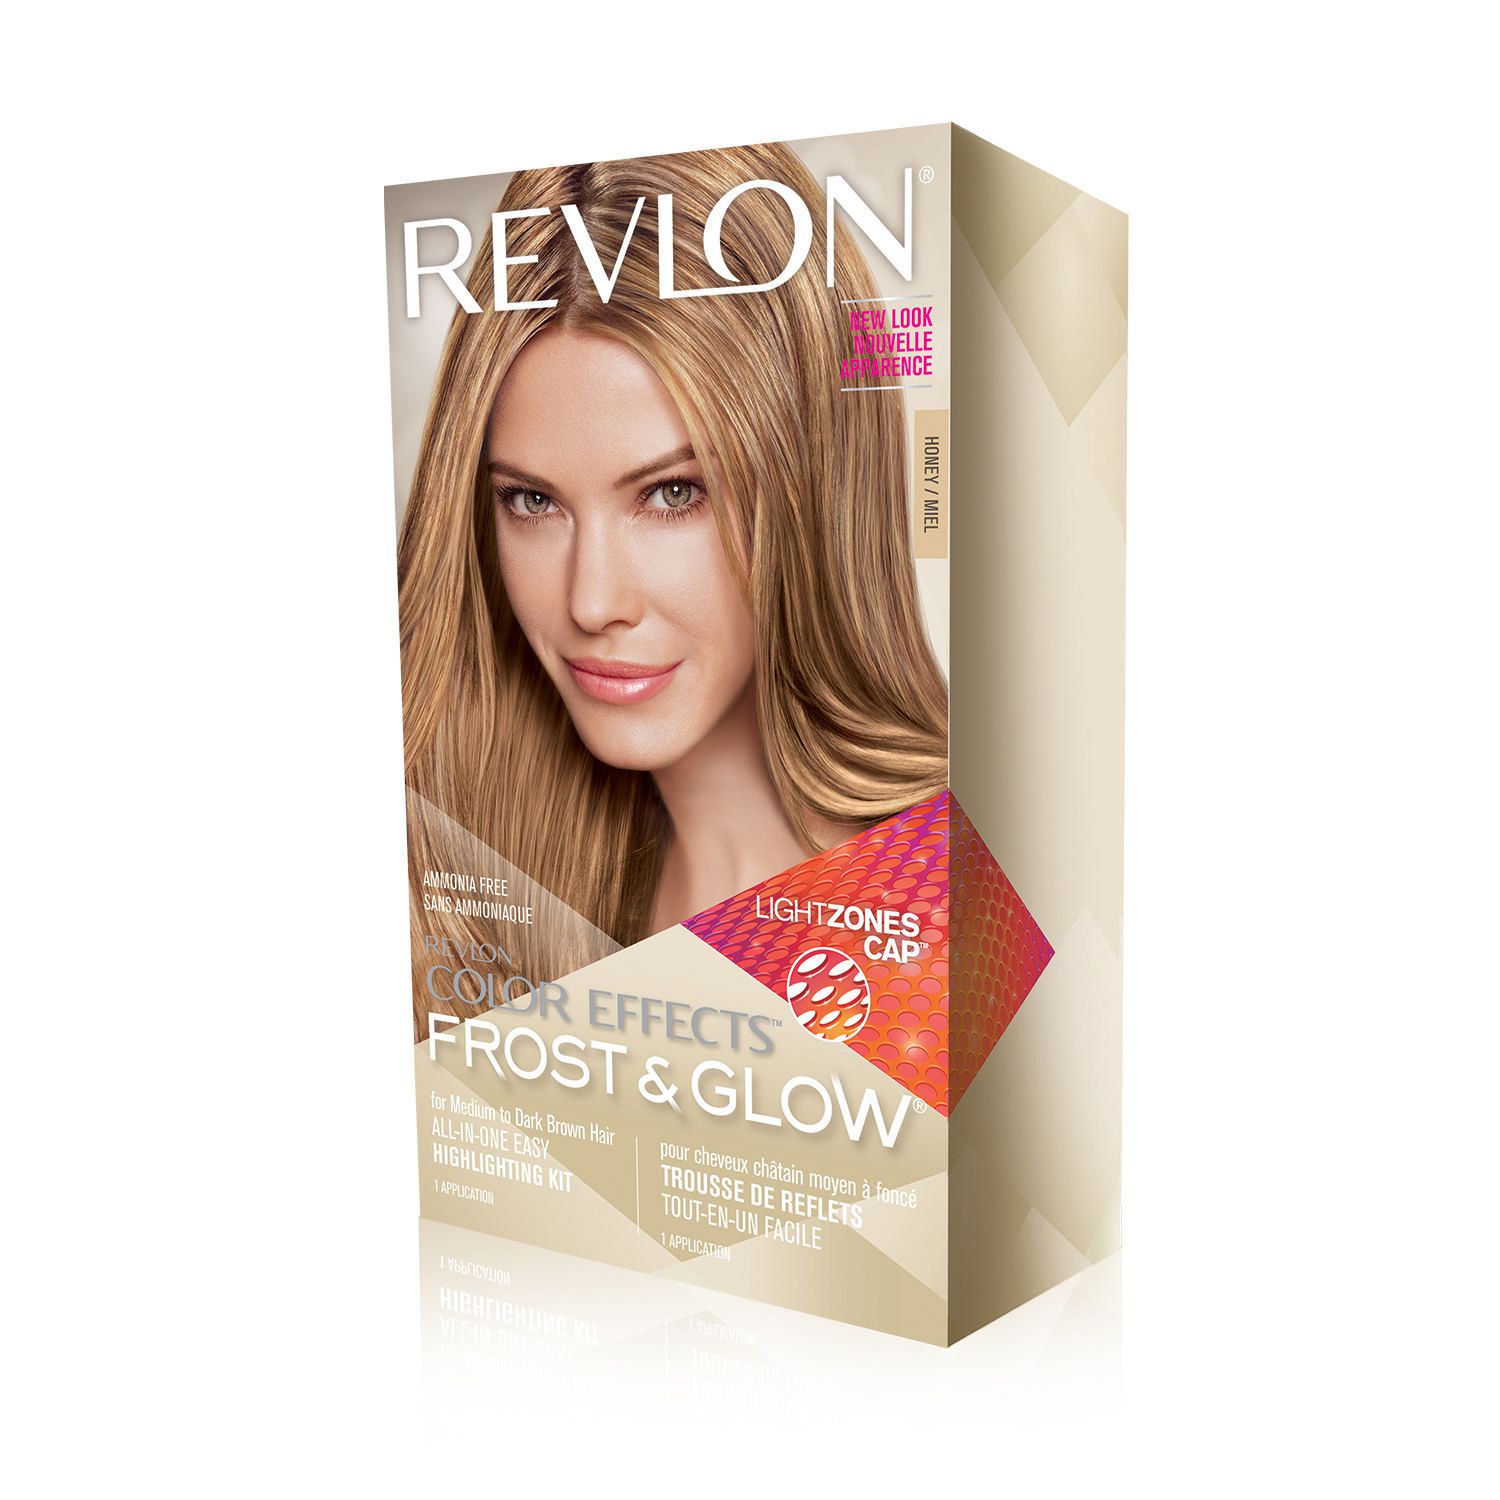 DIY HIGHLIGHTS USING Revlon Frost Glow Highlighting Kit | Best Diy Highlight  Kit 